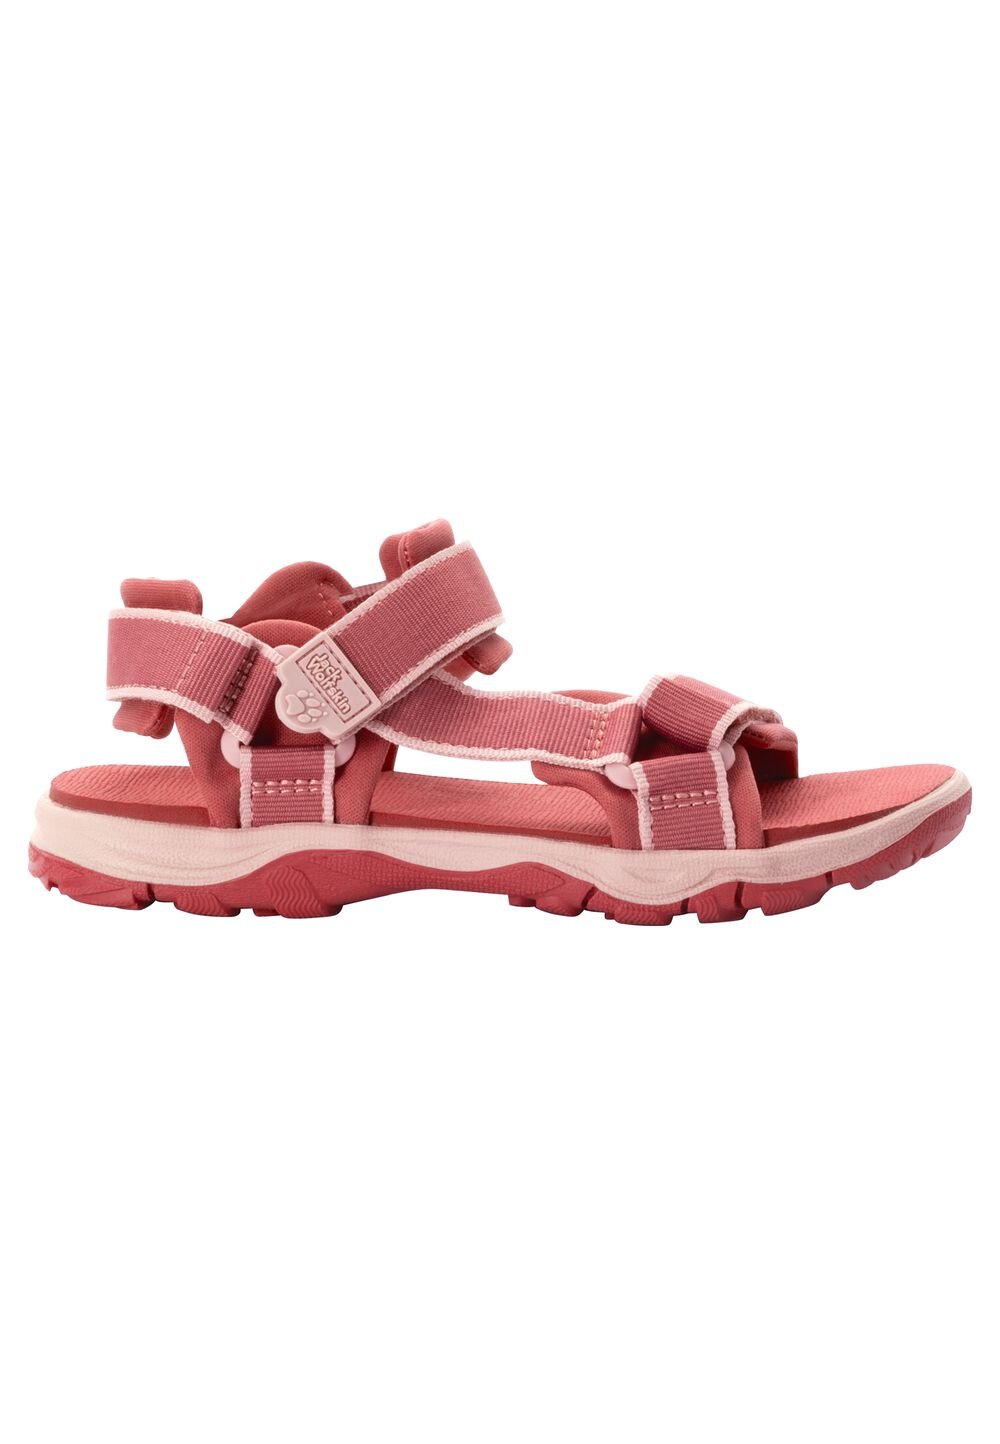 Jack Wolfskin Seven Seas 3 Kids Kinderen sandalen 38 soft pink soft pink